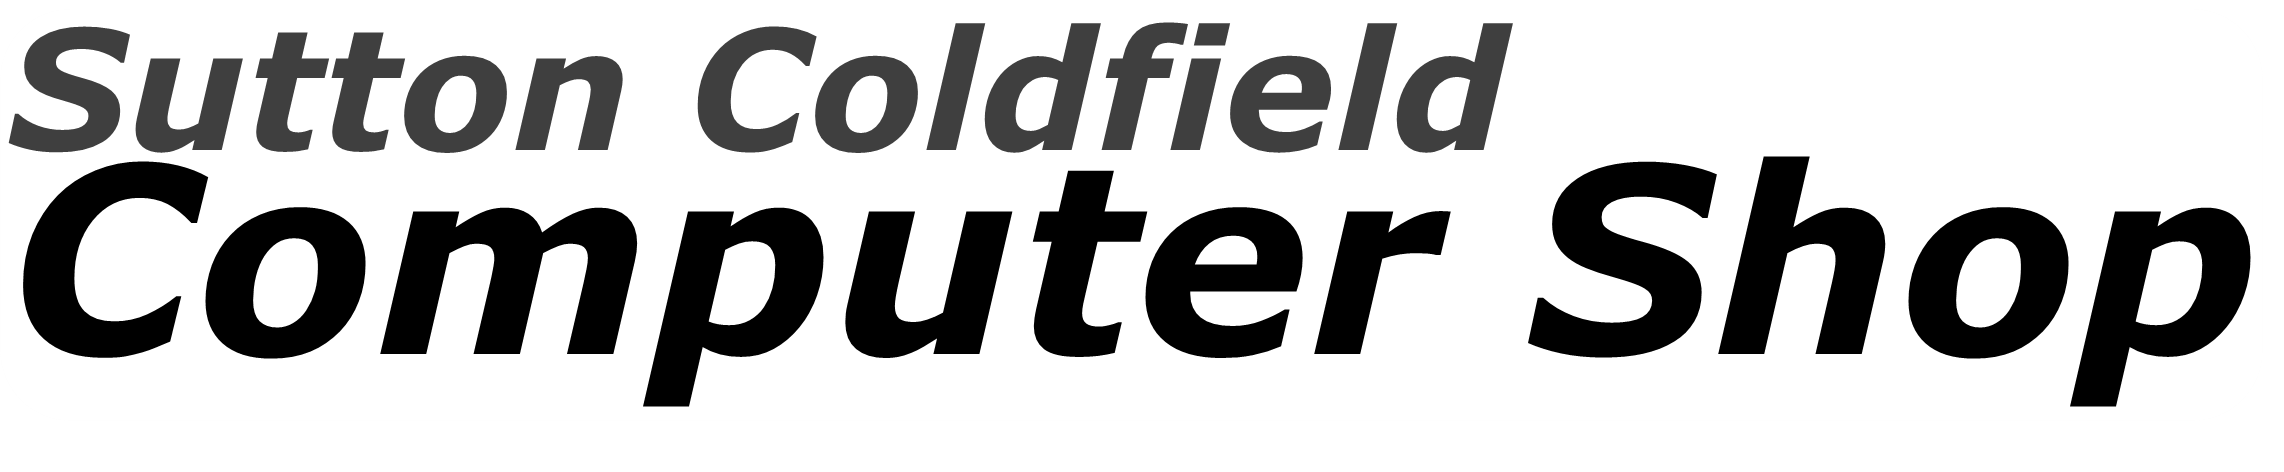 Sutton Coldfield Computer Shop Logo Footer